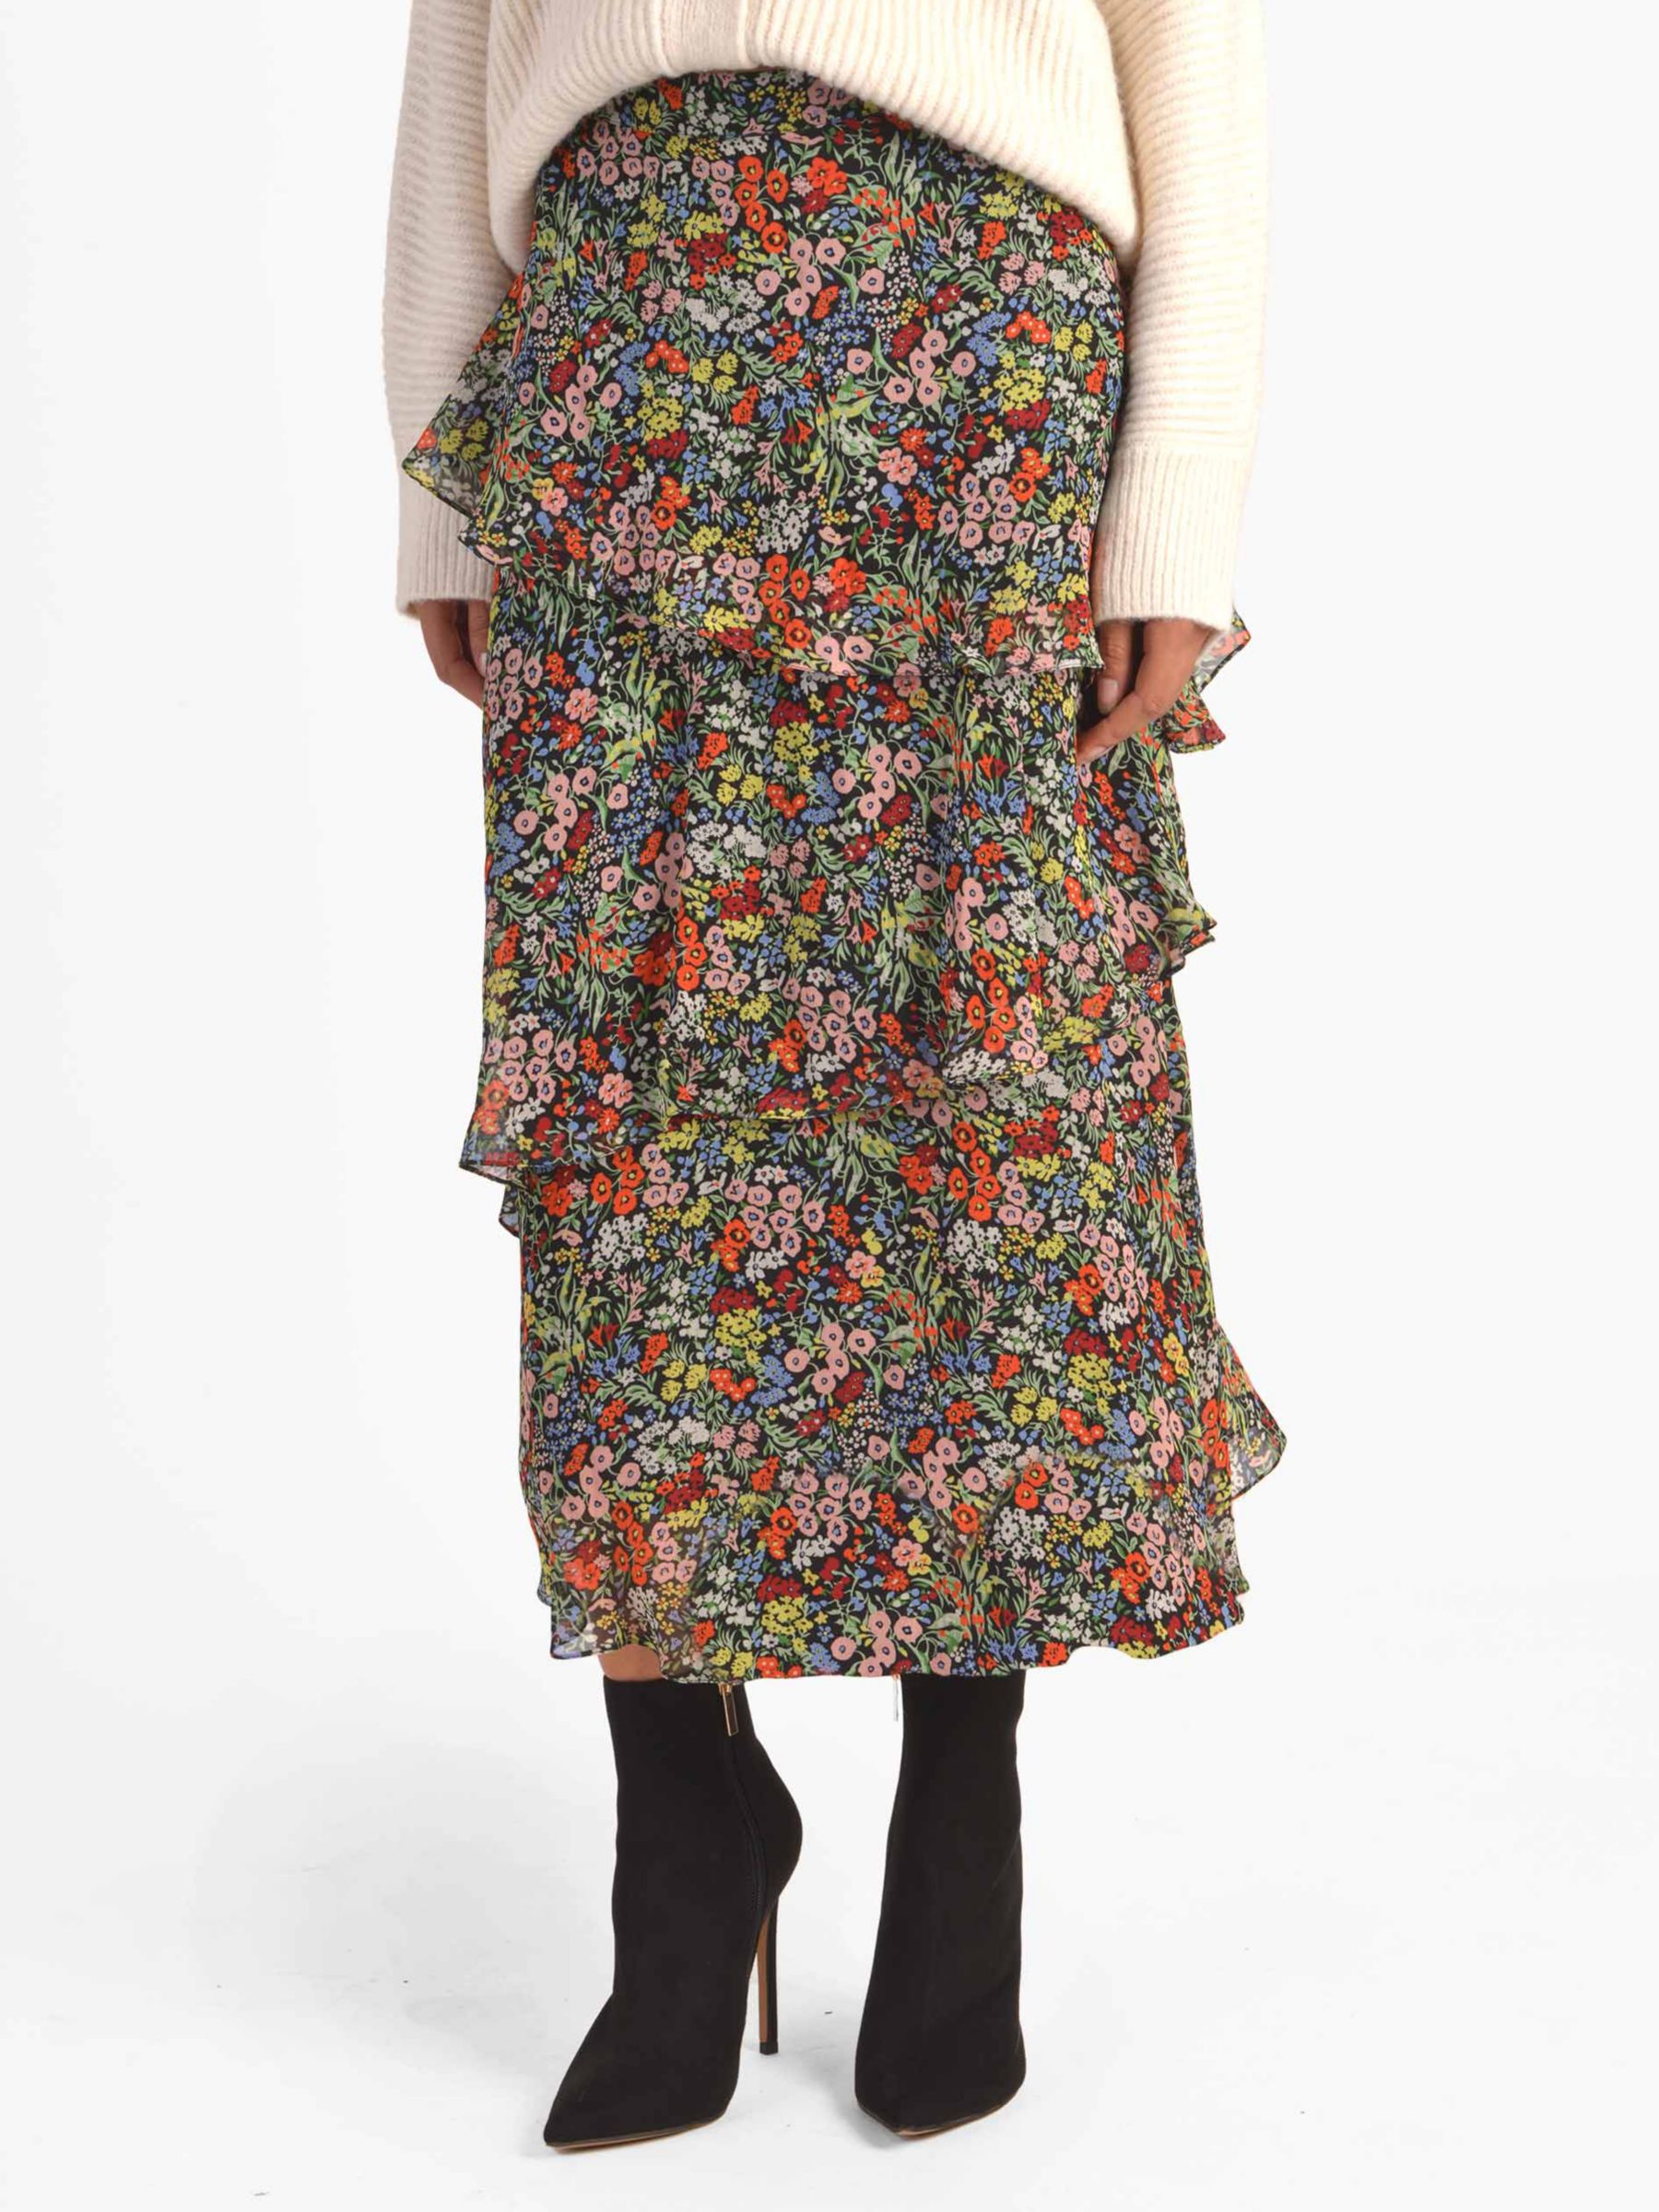 Ro&Zo Autumm Floral Tiered Midi Skirt, Black/Multi at John Lewis & Partners